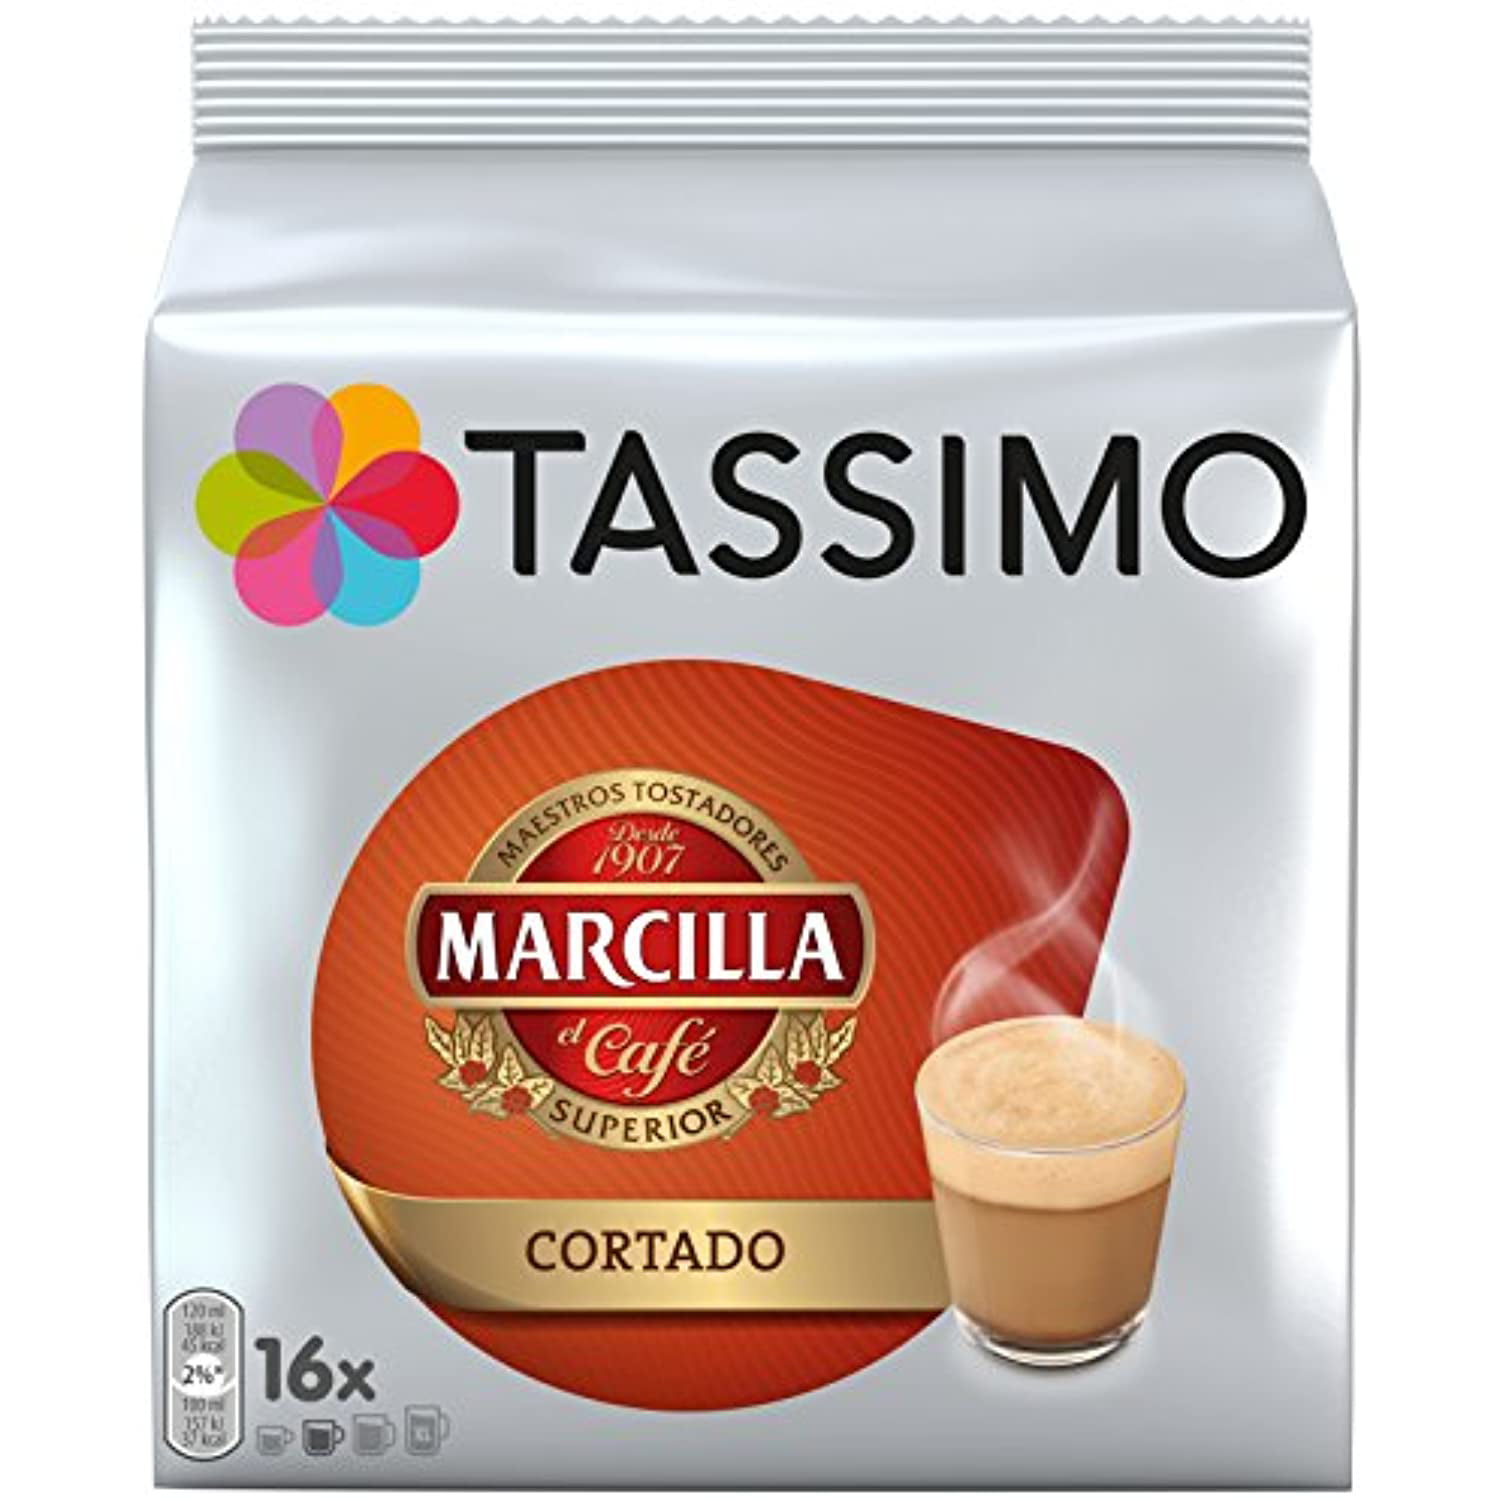 Tassimo Cafè Marcilla Cortado Café 16 dosettes - Paquet de 5 (80 Boissons)